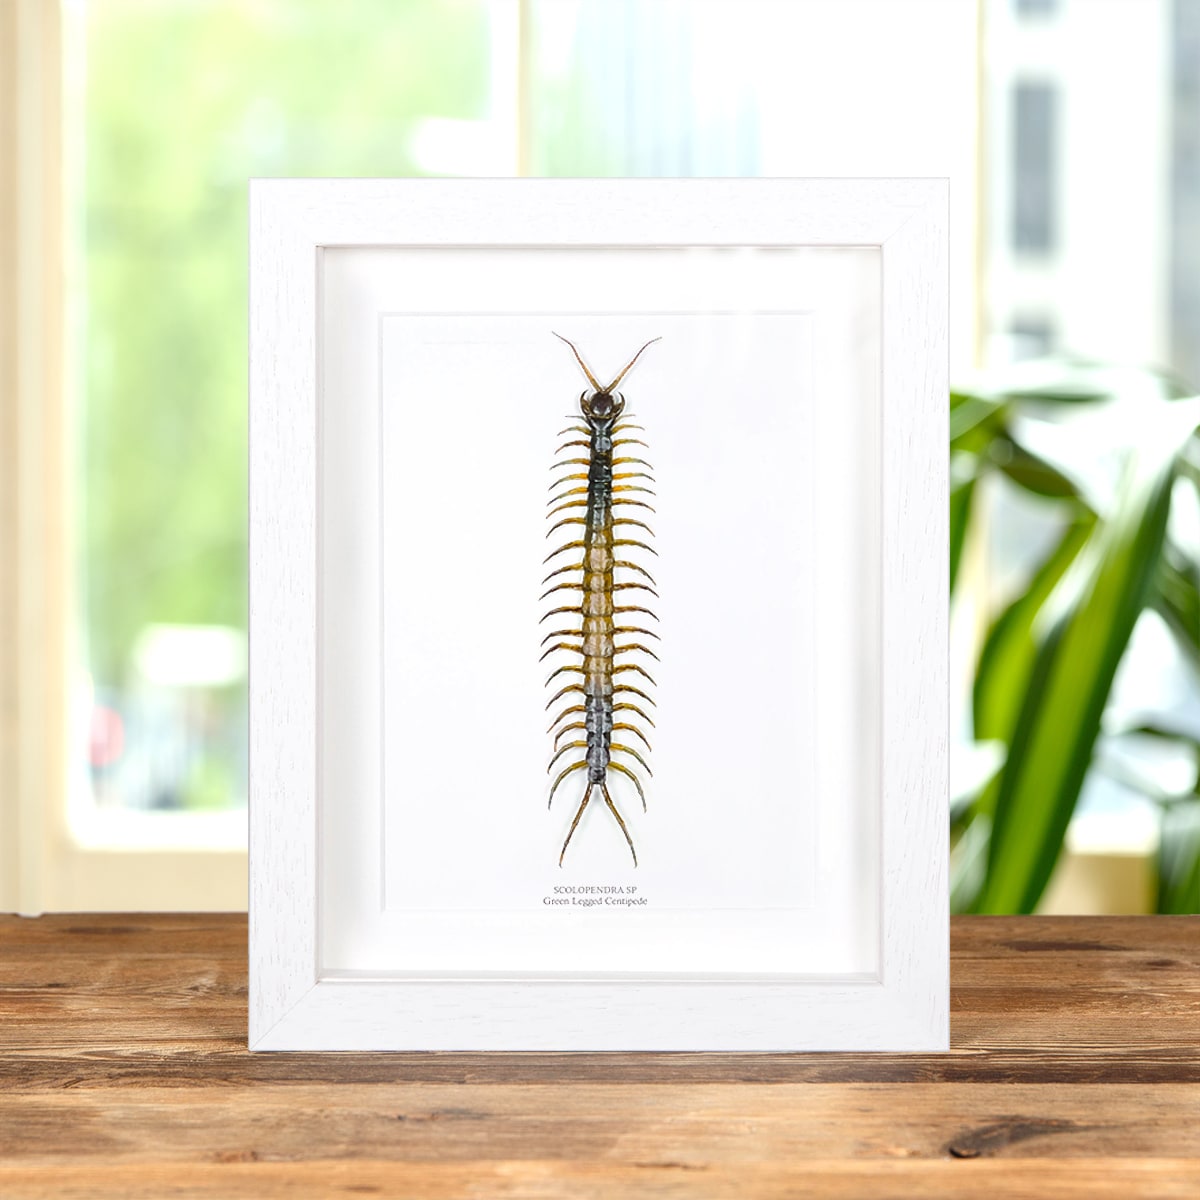 Green Legged Centipede In Box Frame (Scolopendra sp)